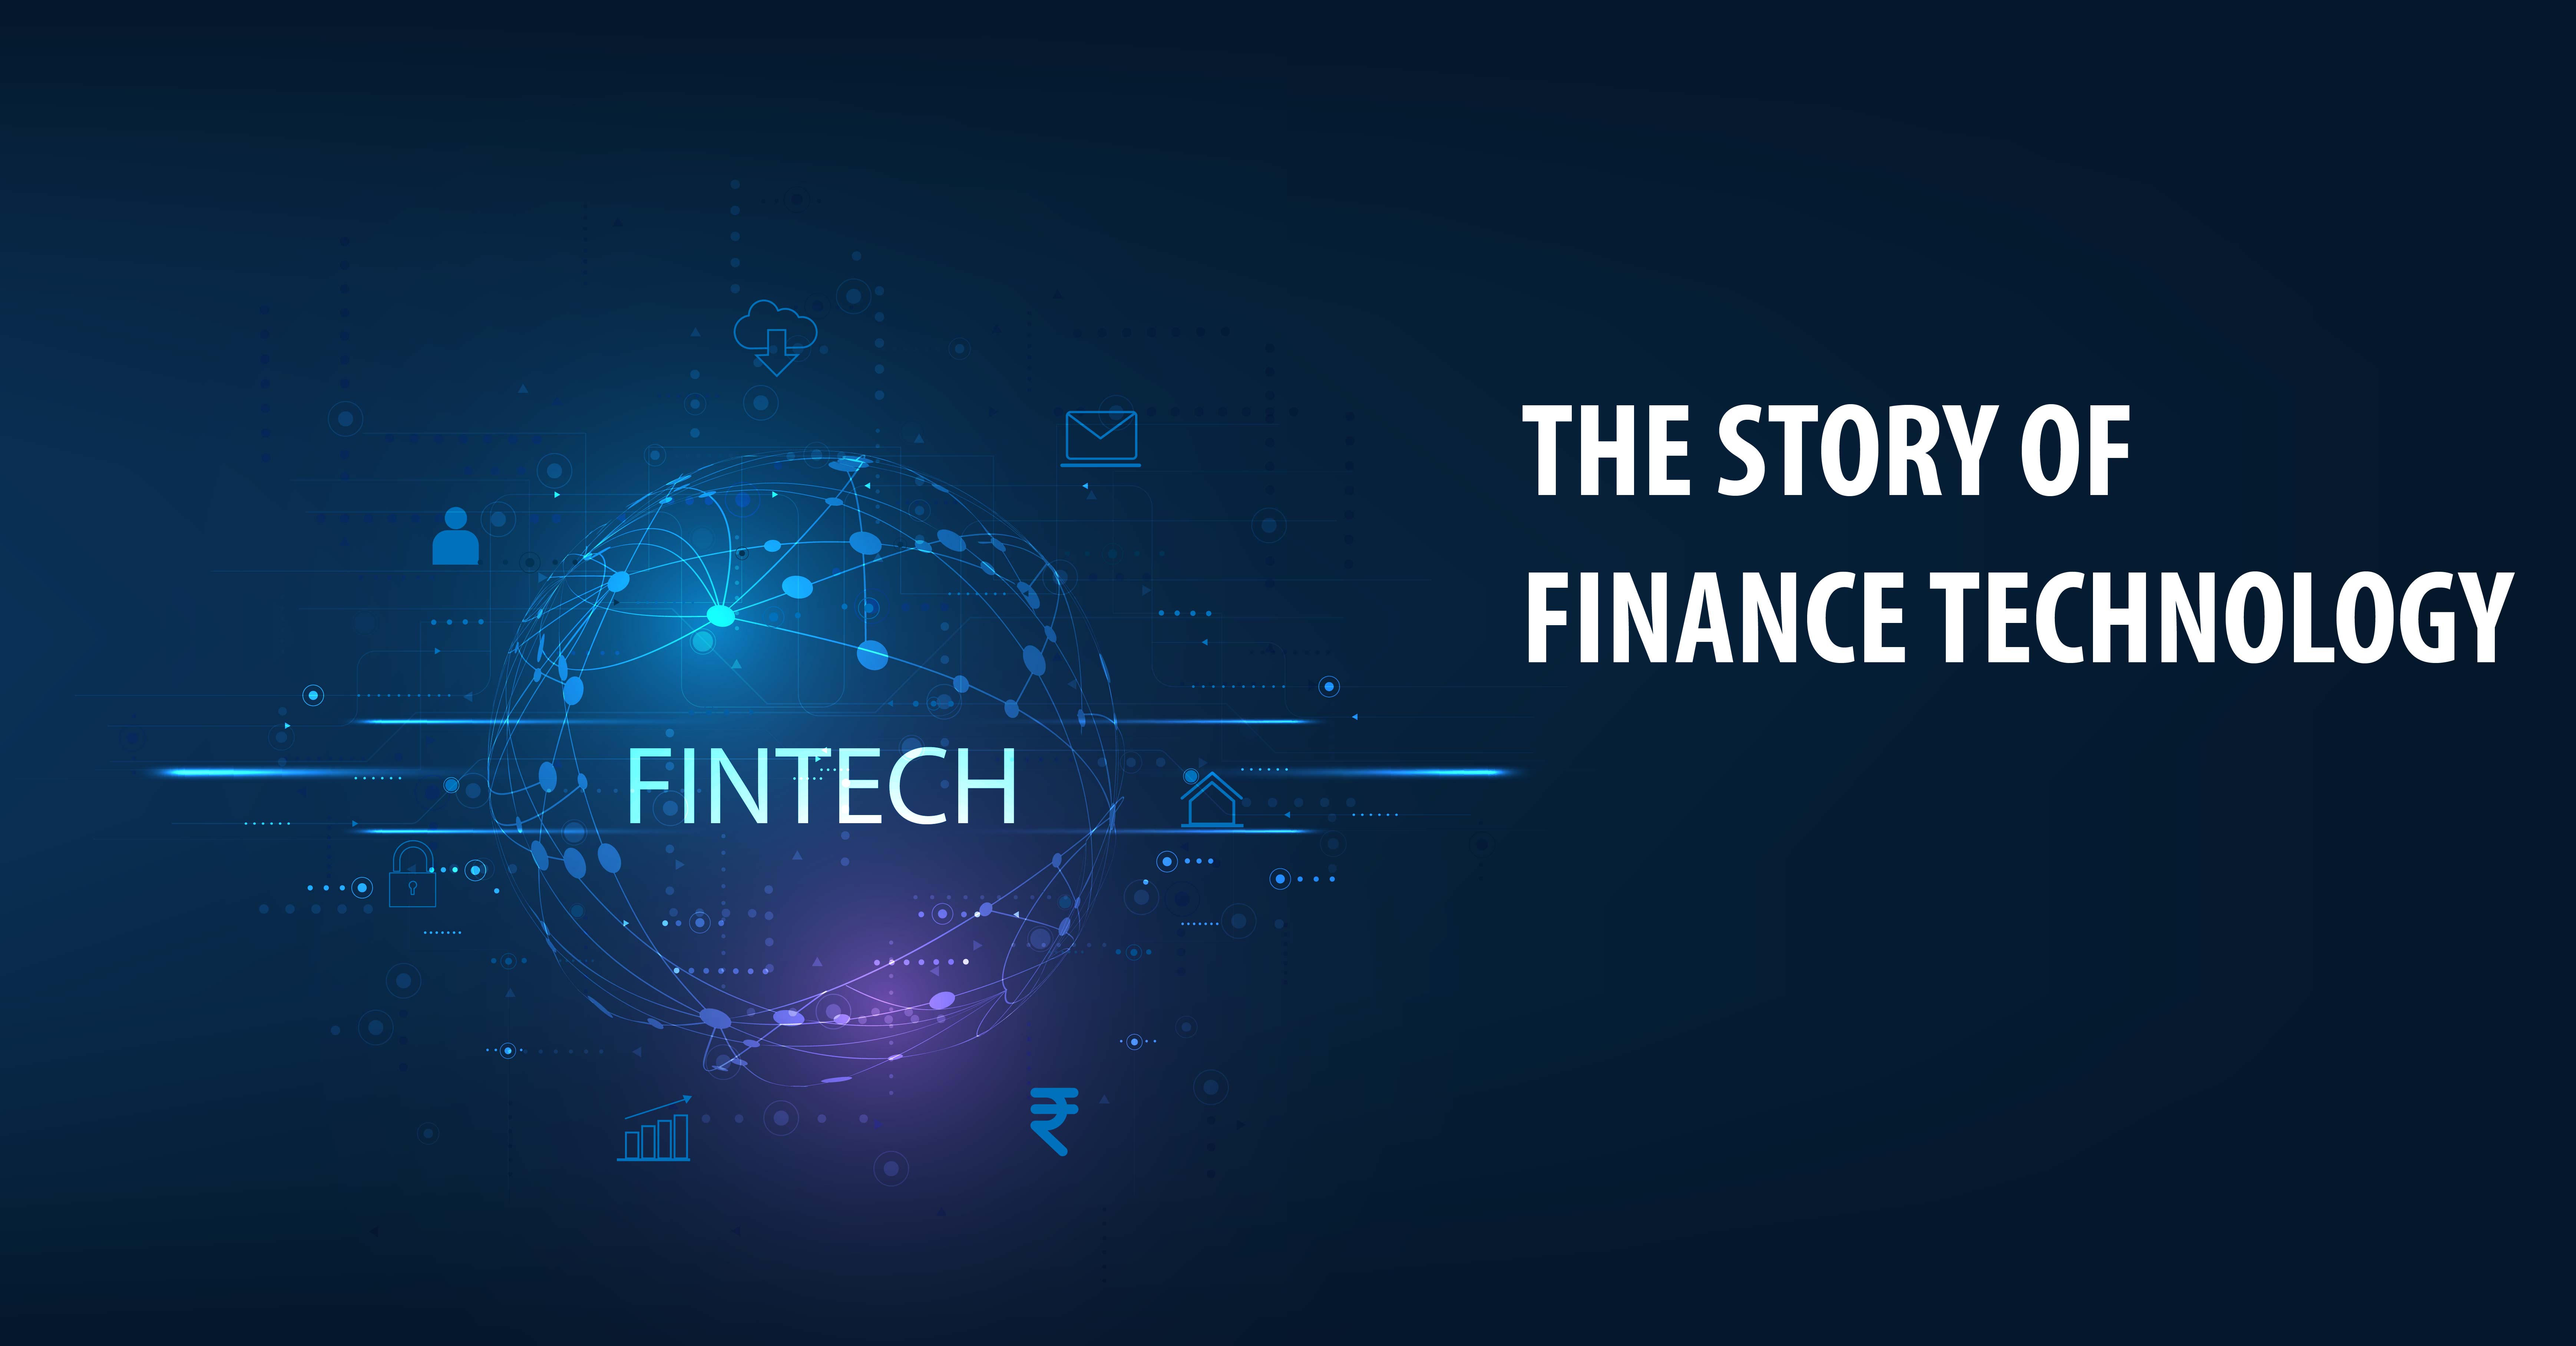 The Story of Finance Technology